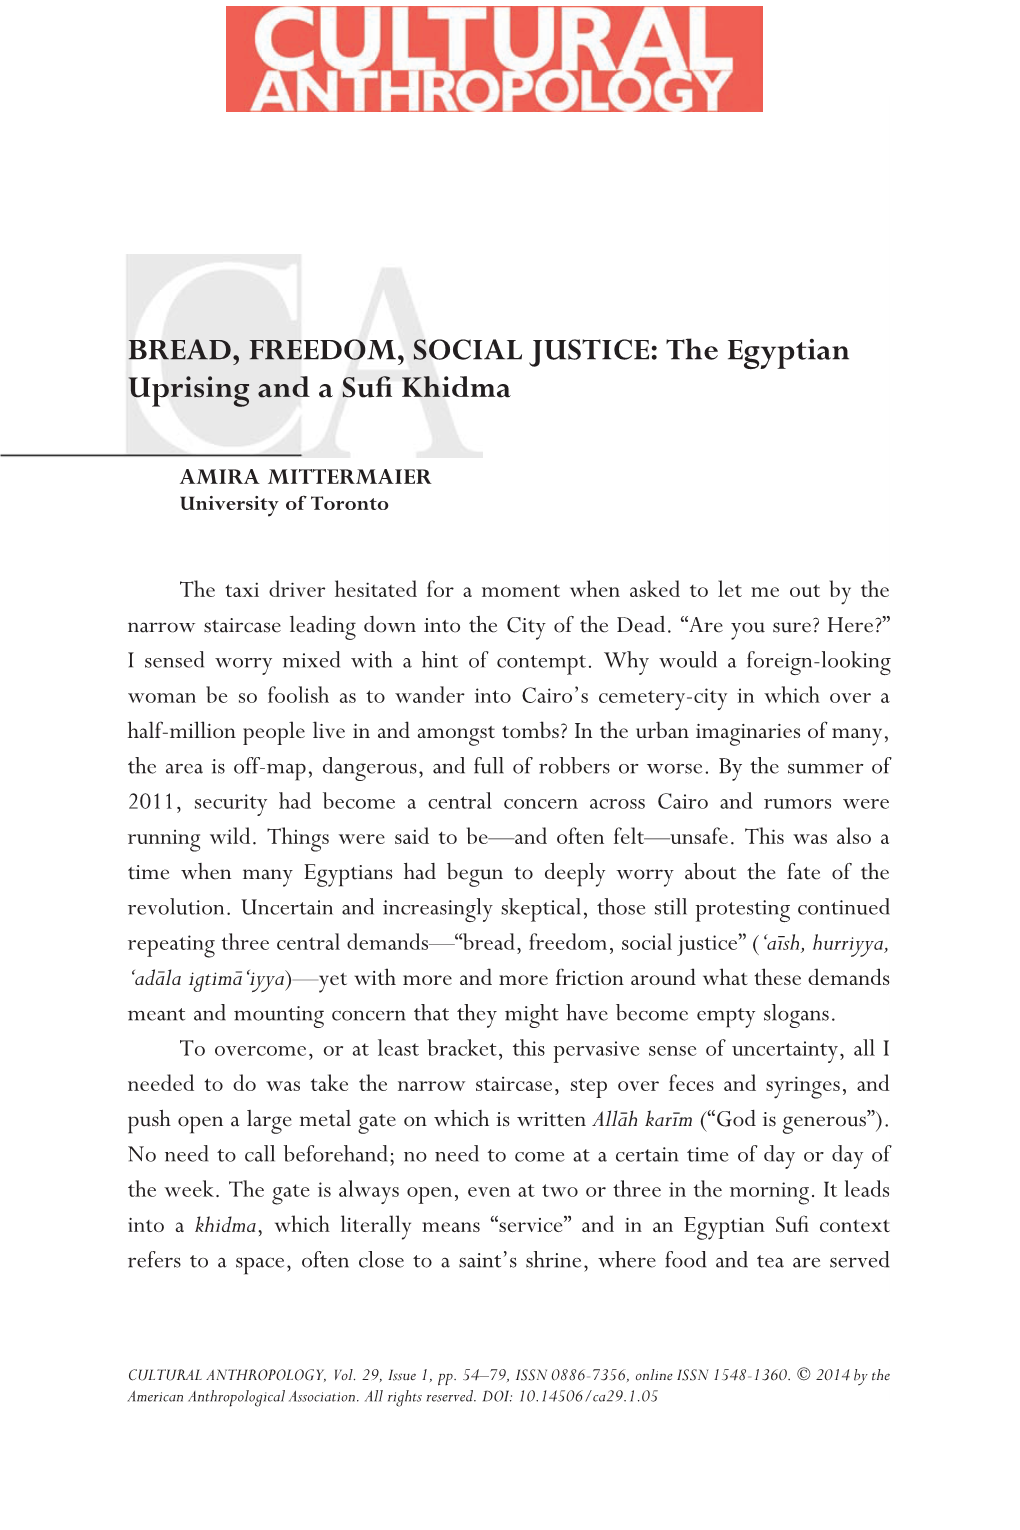 The Egyptian Uprising and a Sufi Khidma